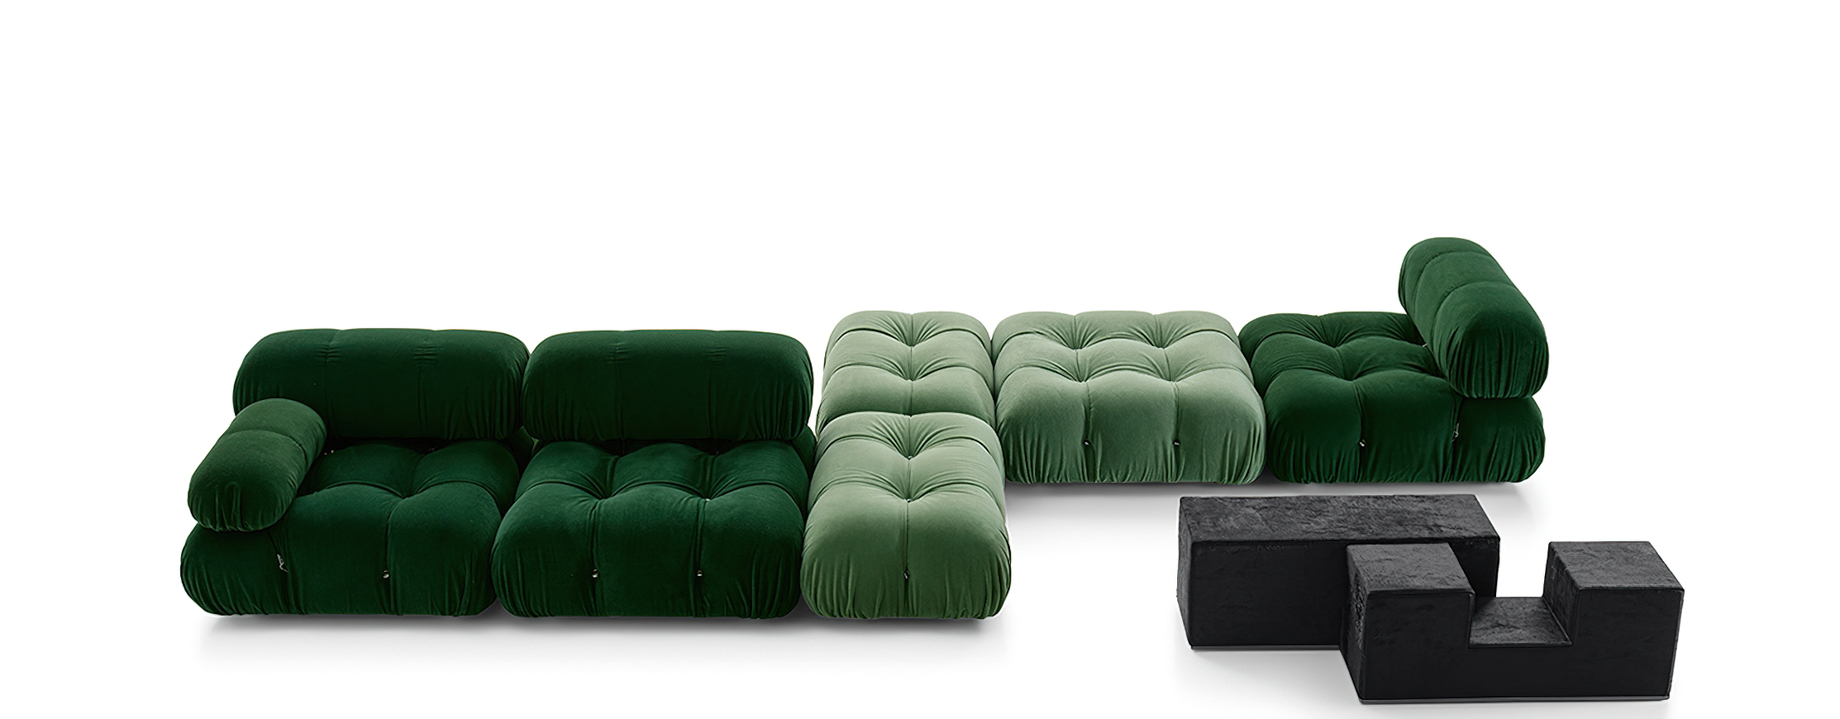 Camaleonda Classic Sofa Collection B&B Italia – Mario Bellini – Green